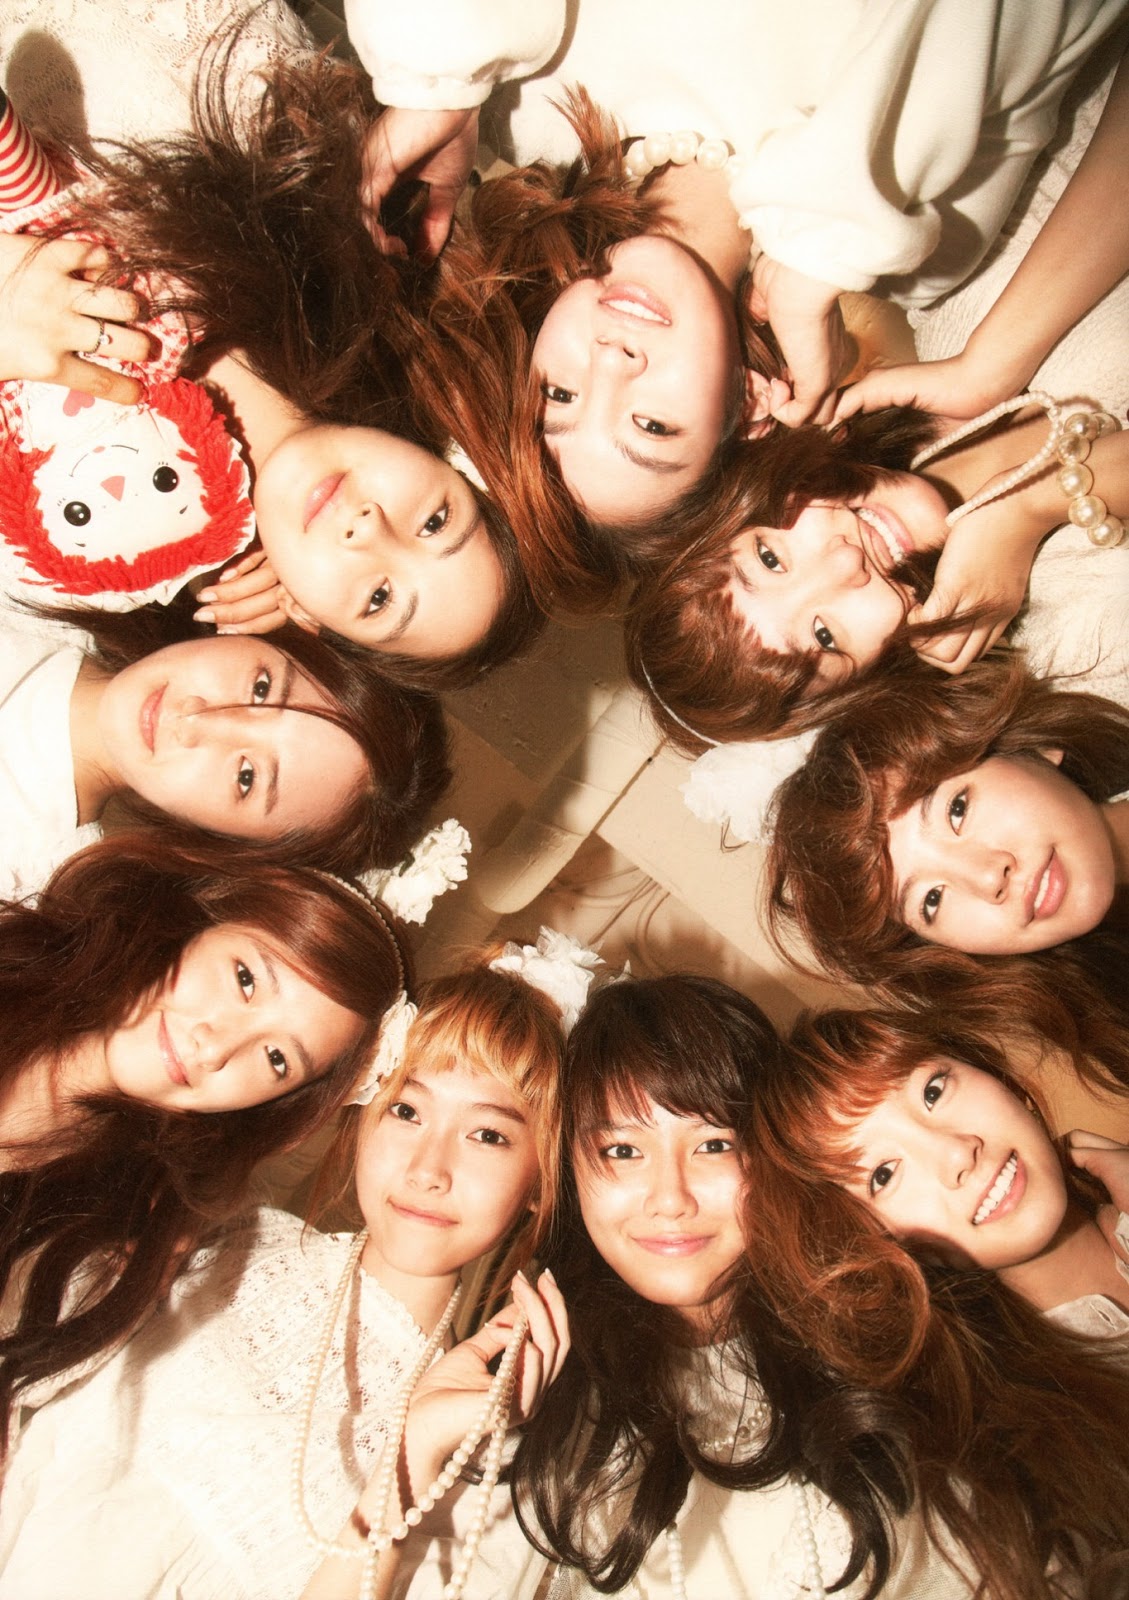 Girls+Generation+Lay+in+Circle+Wallpaper